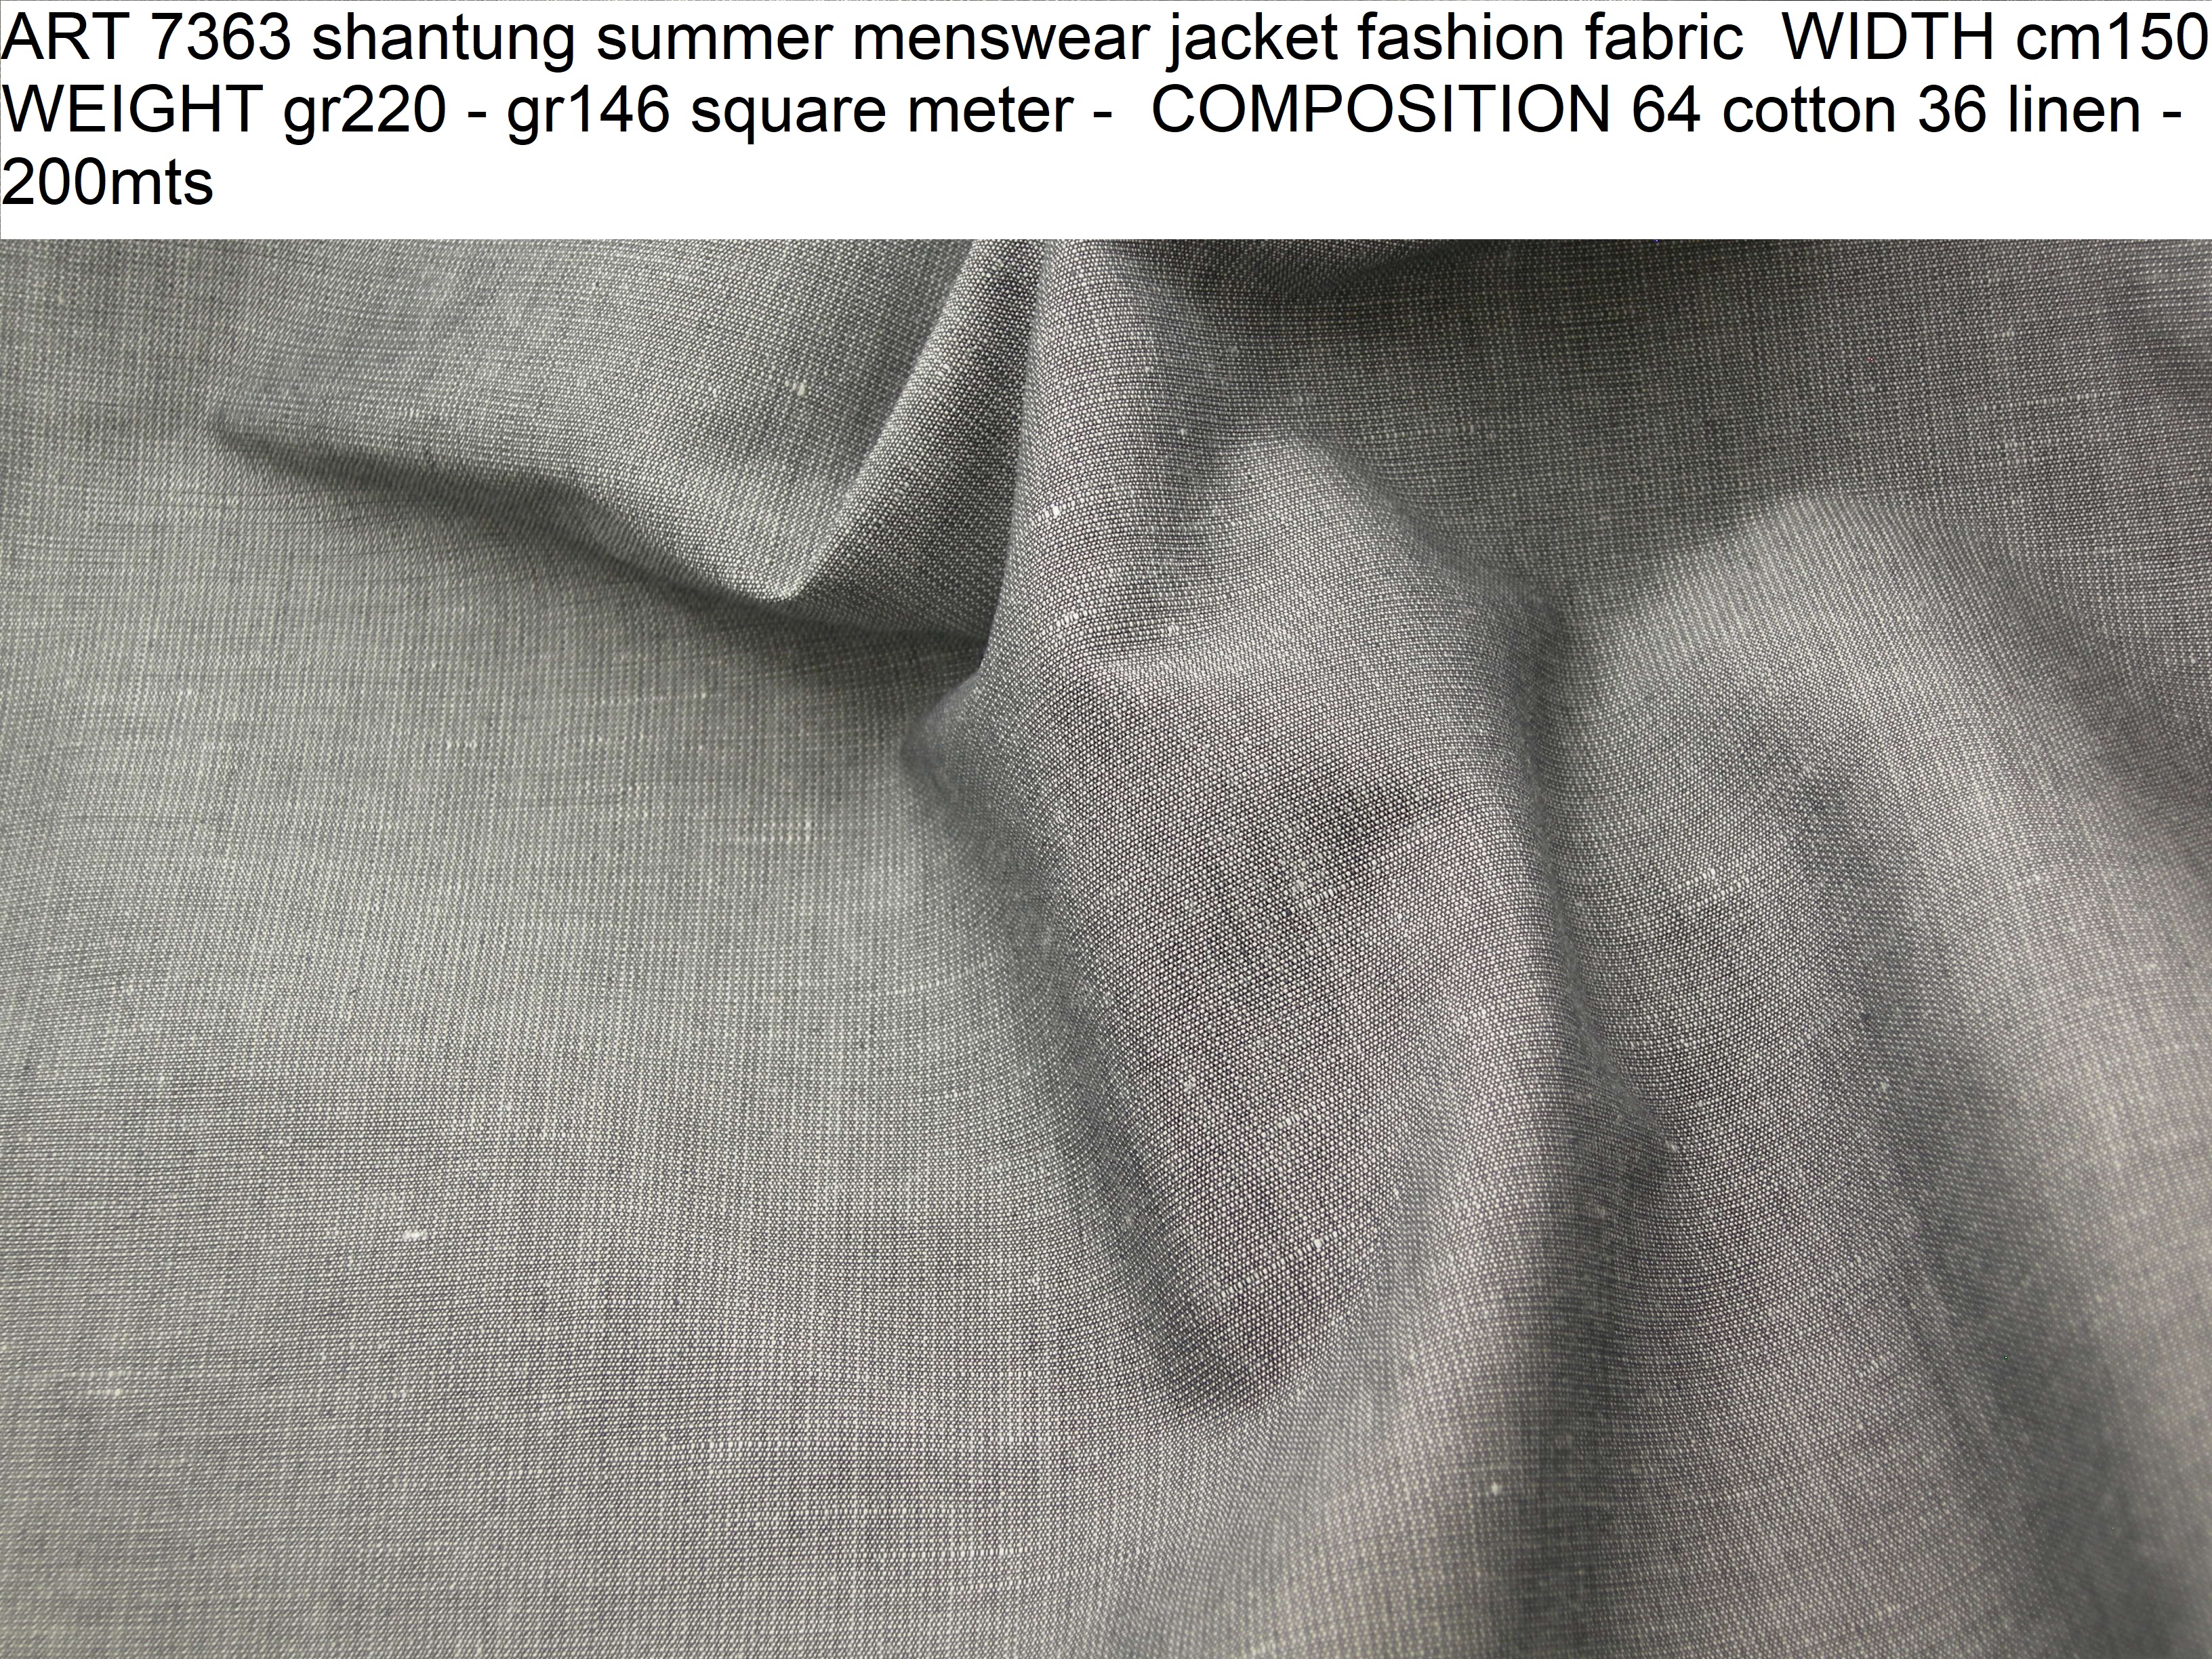 ART 7363 shantung summer menswear jacket fashion fabric WIDTH cm150 WEIGHT gr220 - gr146 square meter - COMPOSITION 64 cotton 36 linen - 200mts